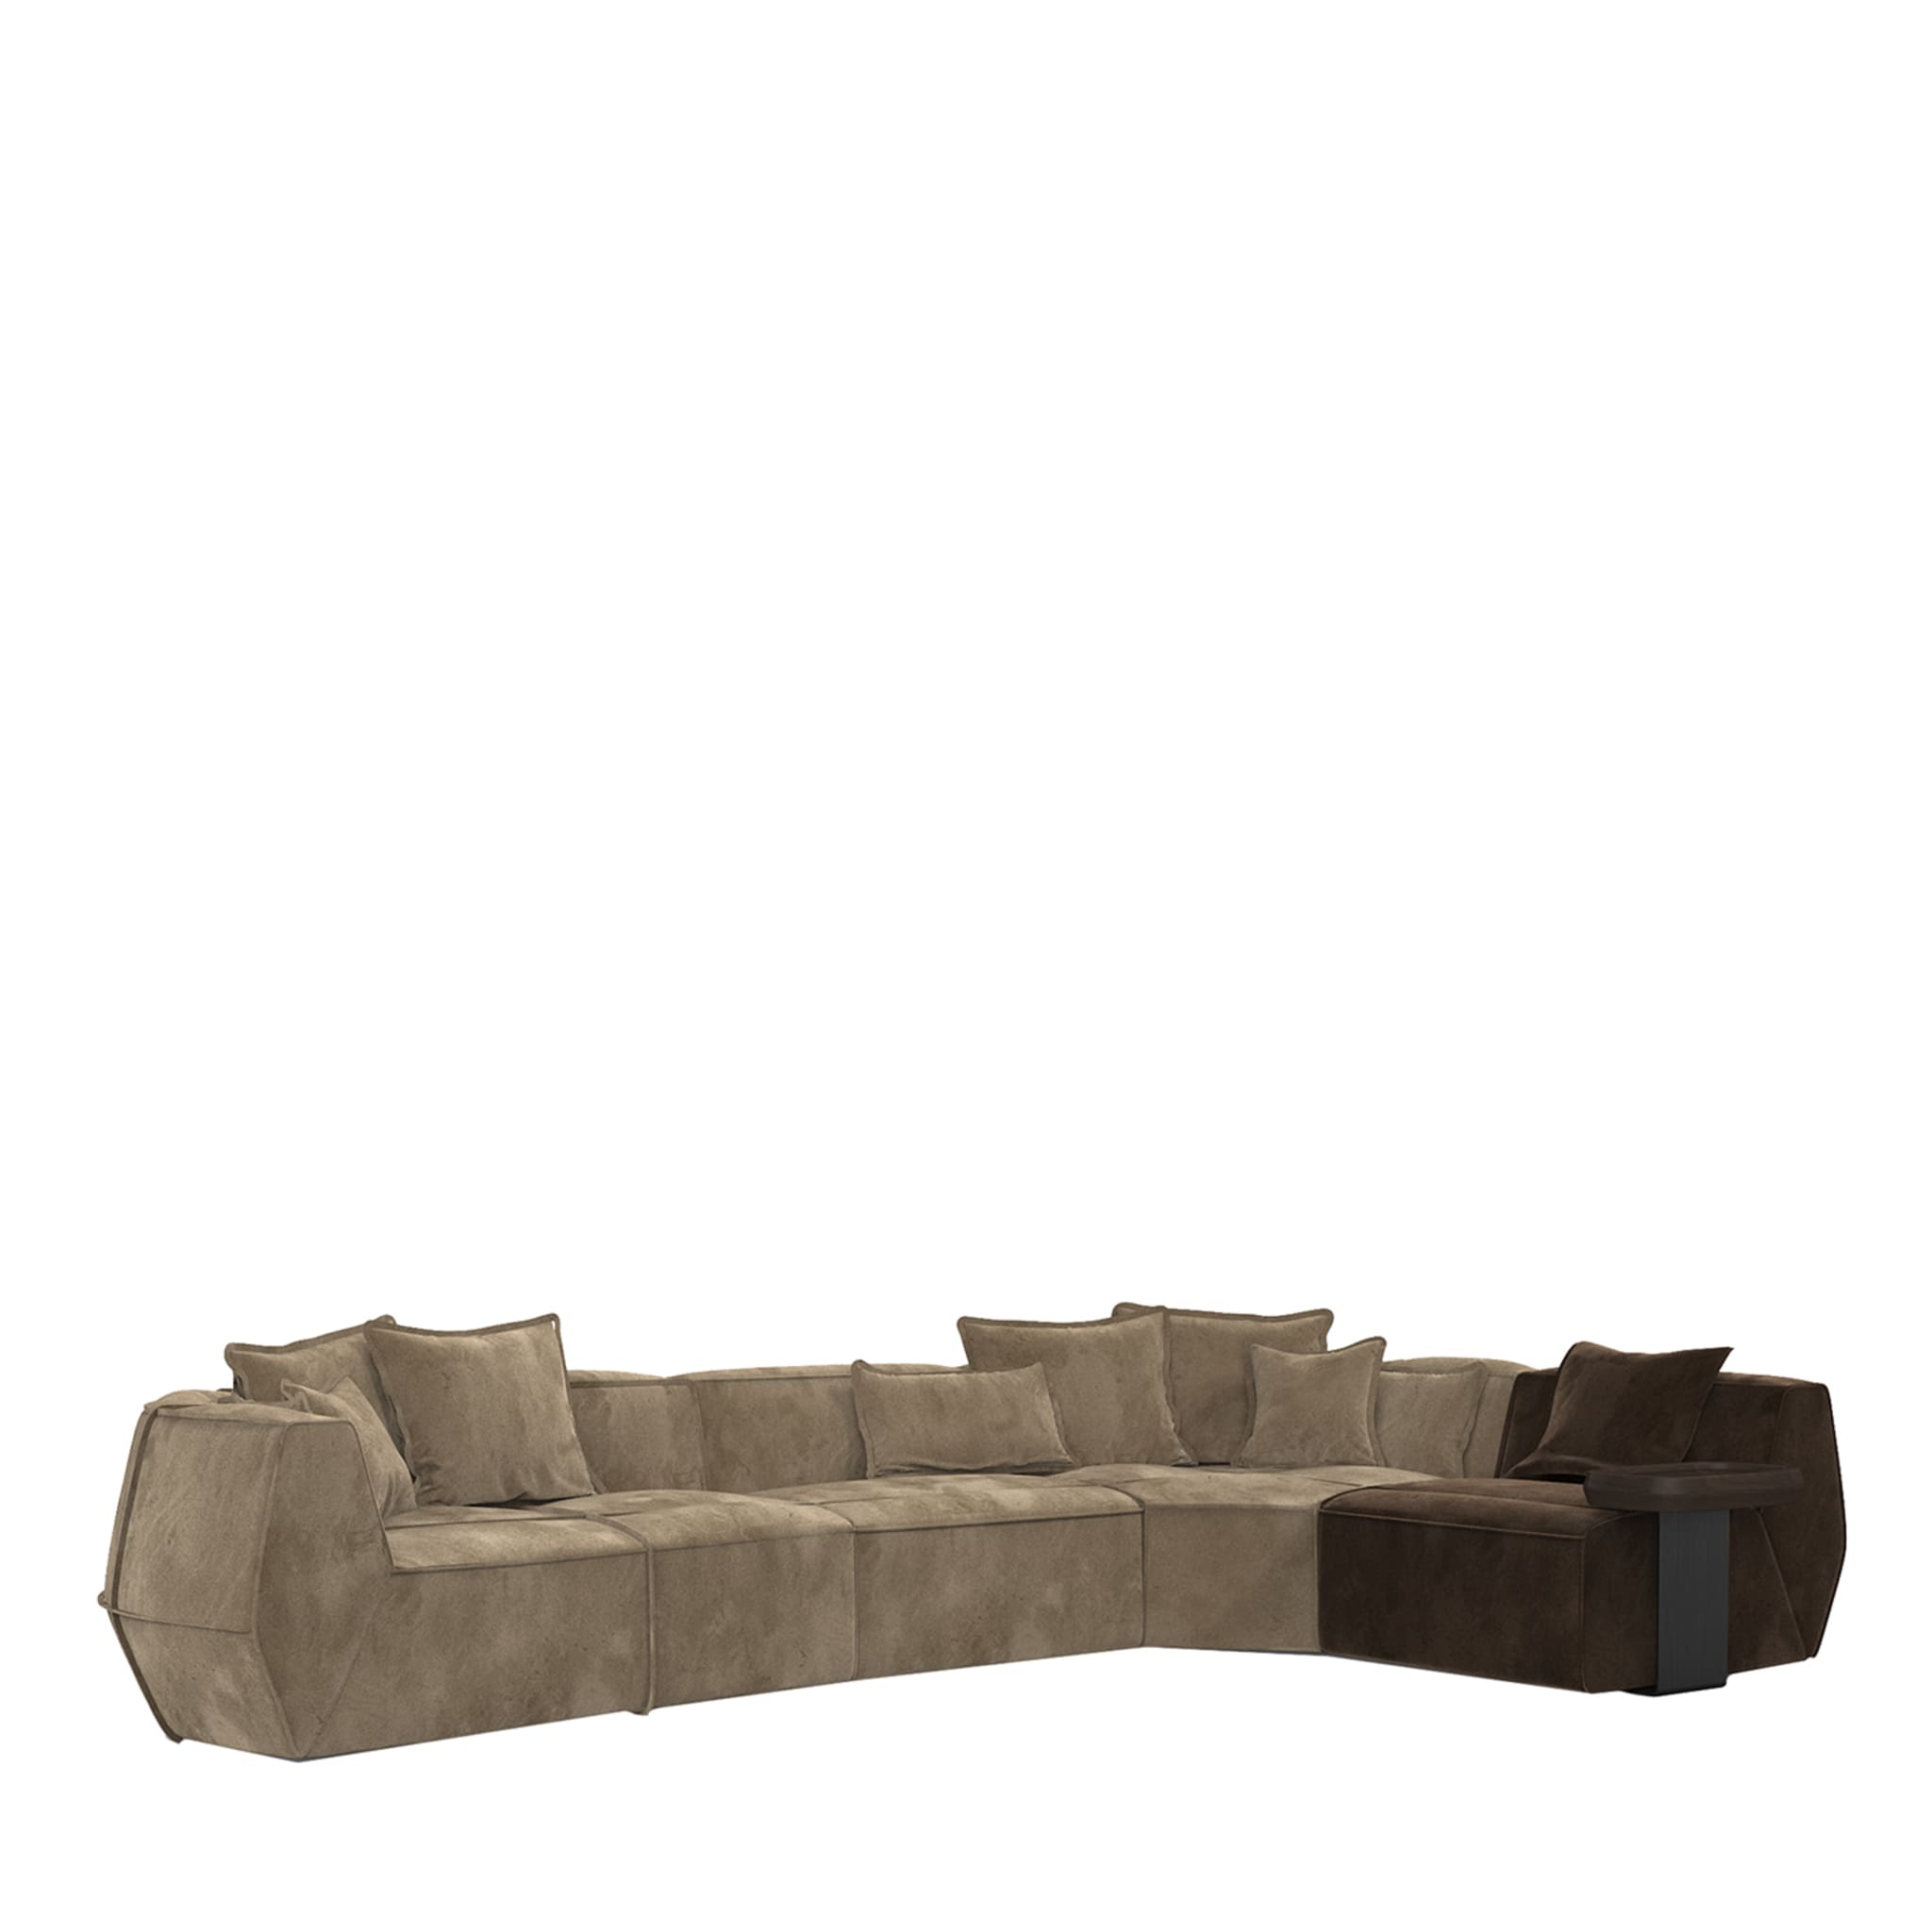 Infinito Two-Tone Brown Leather Sofa by Lorenza Bozzoli #1 - Main view